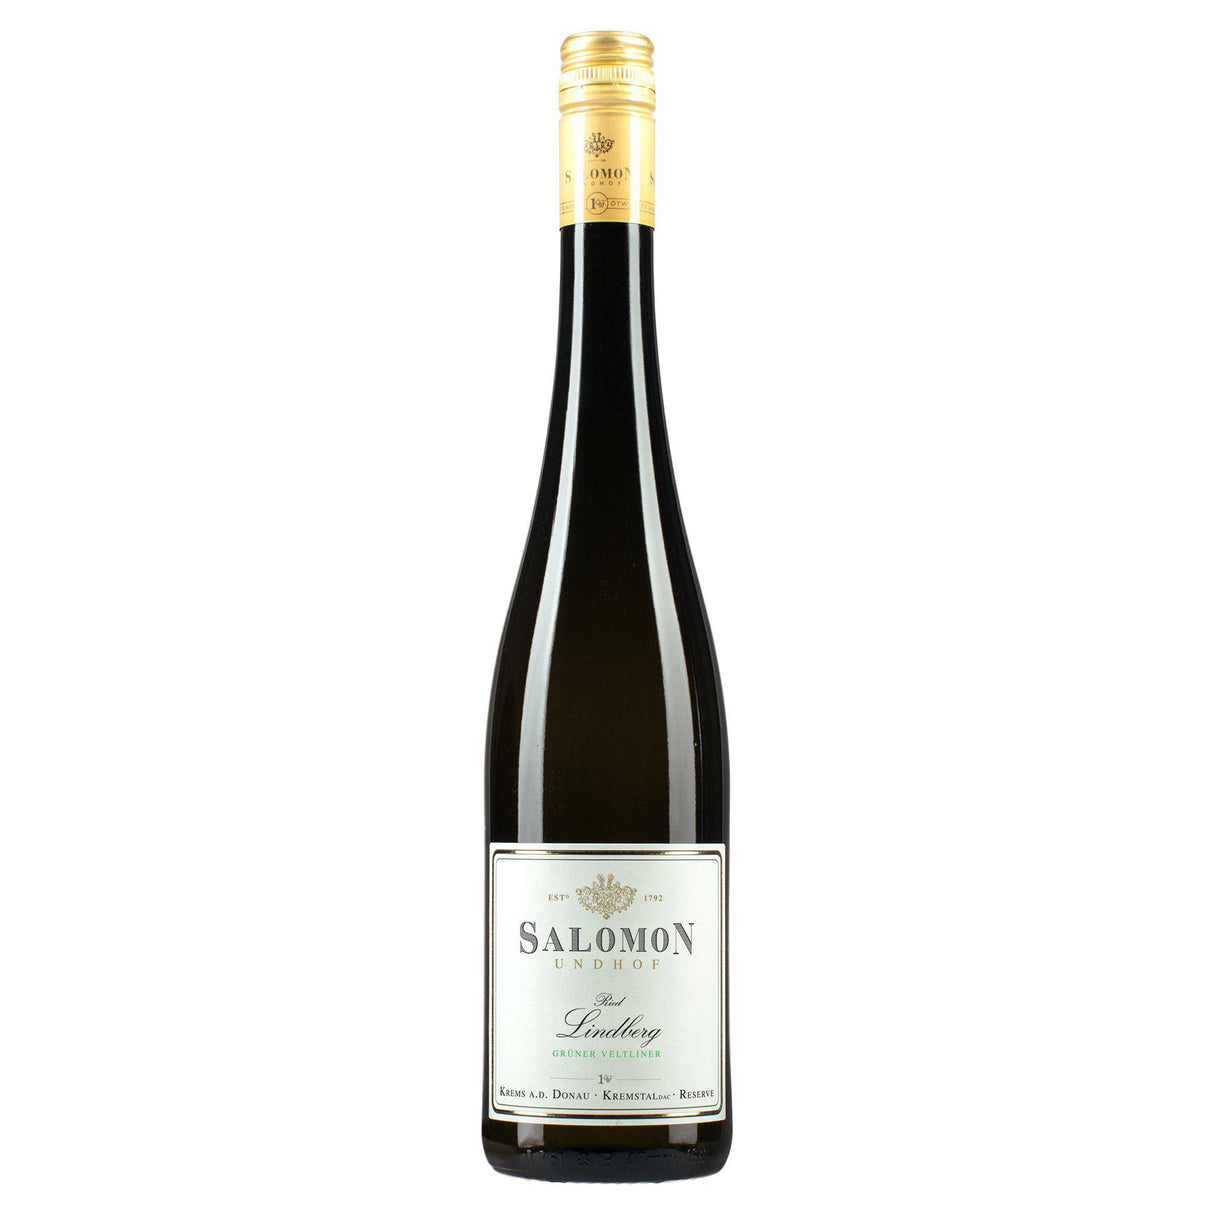 Salomon Lindberg Reserve 1er Erste Lage 2017-White Wine-World Wine